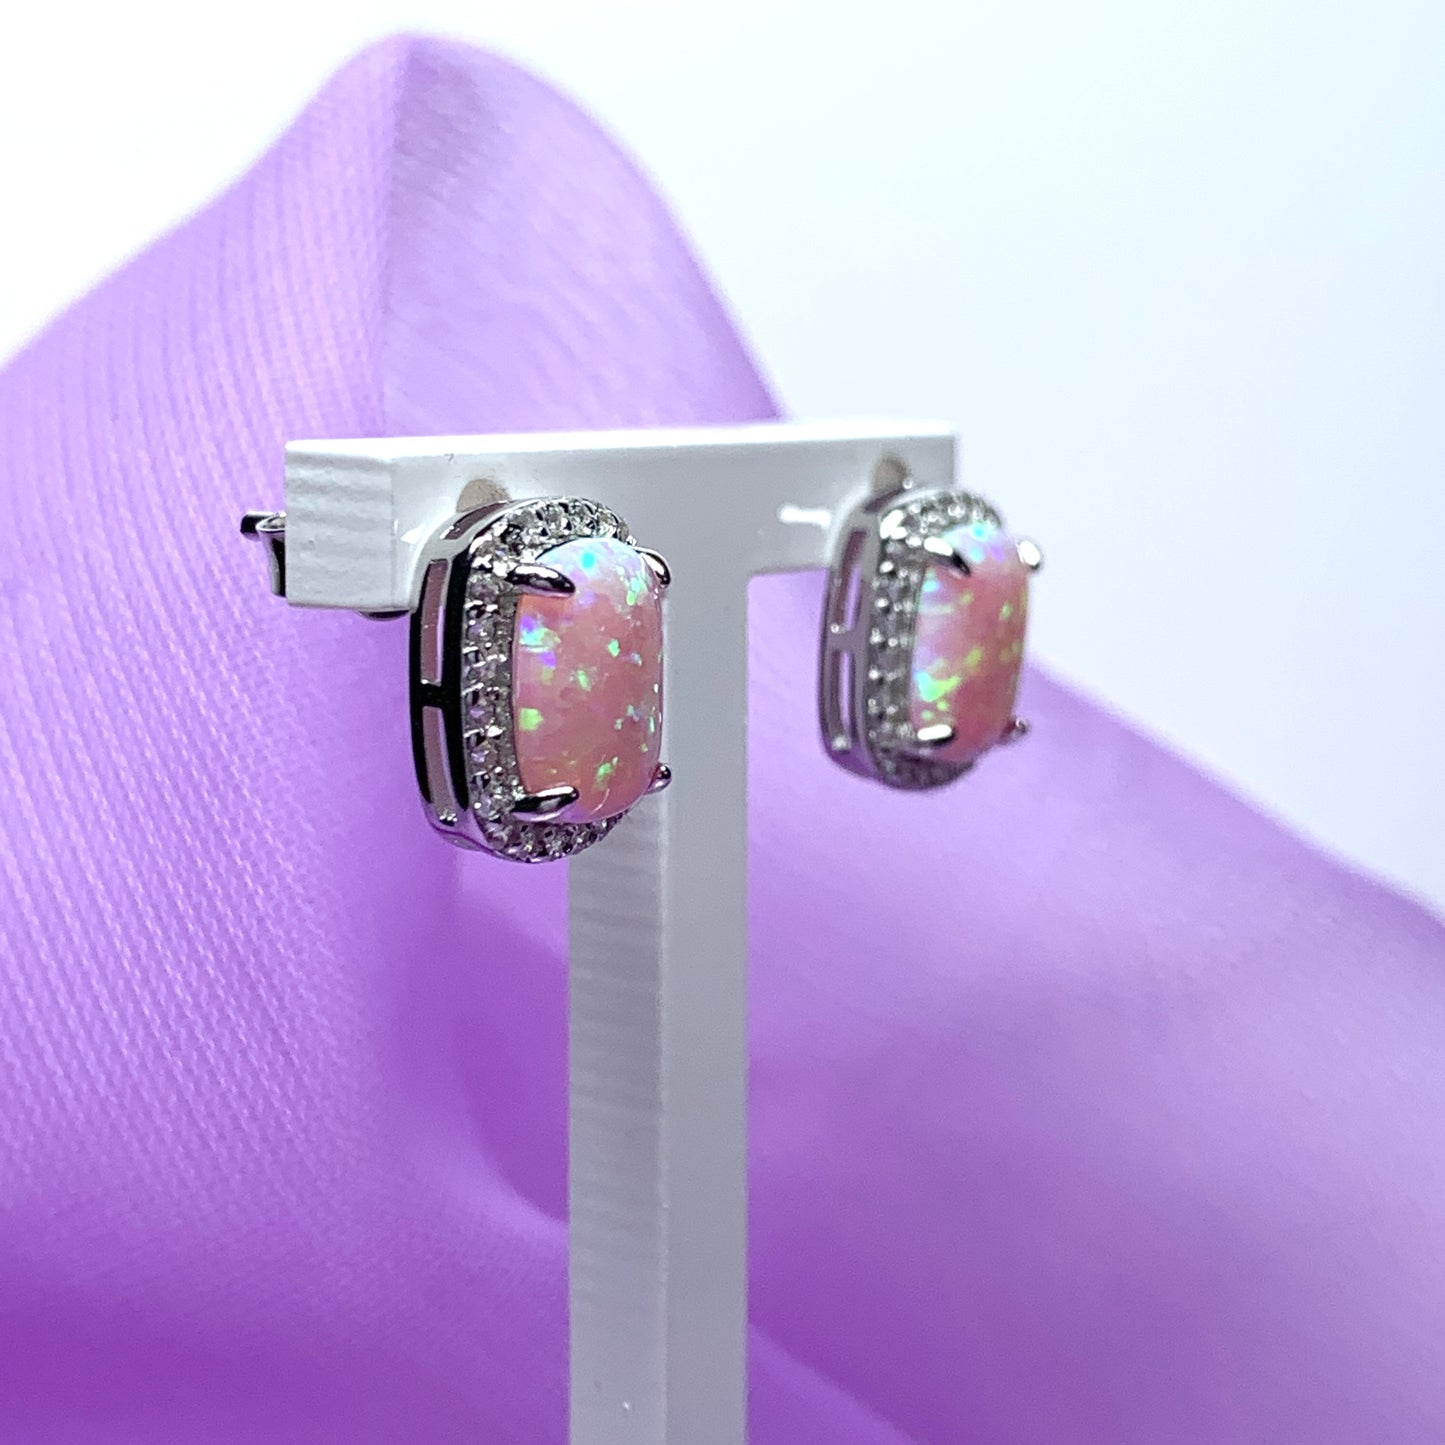 Opal earrings stud square sterling silver